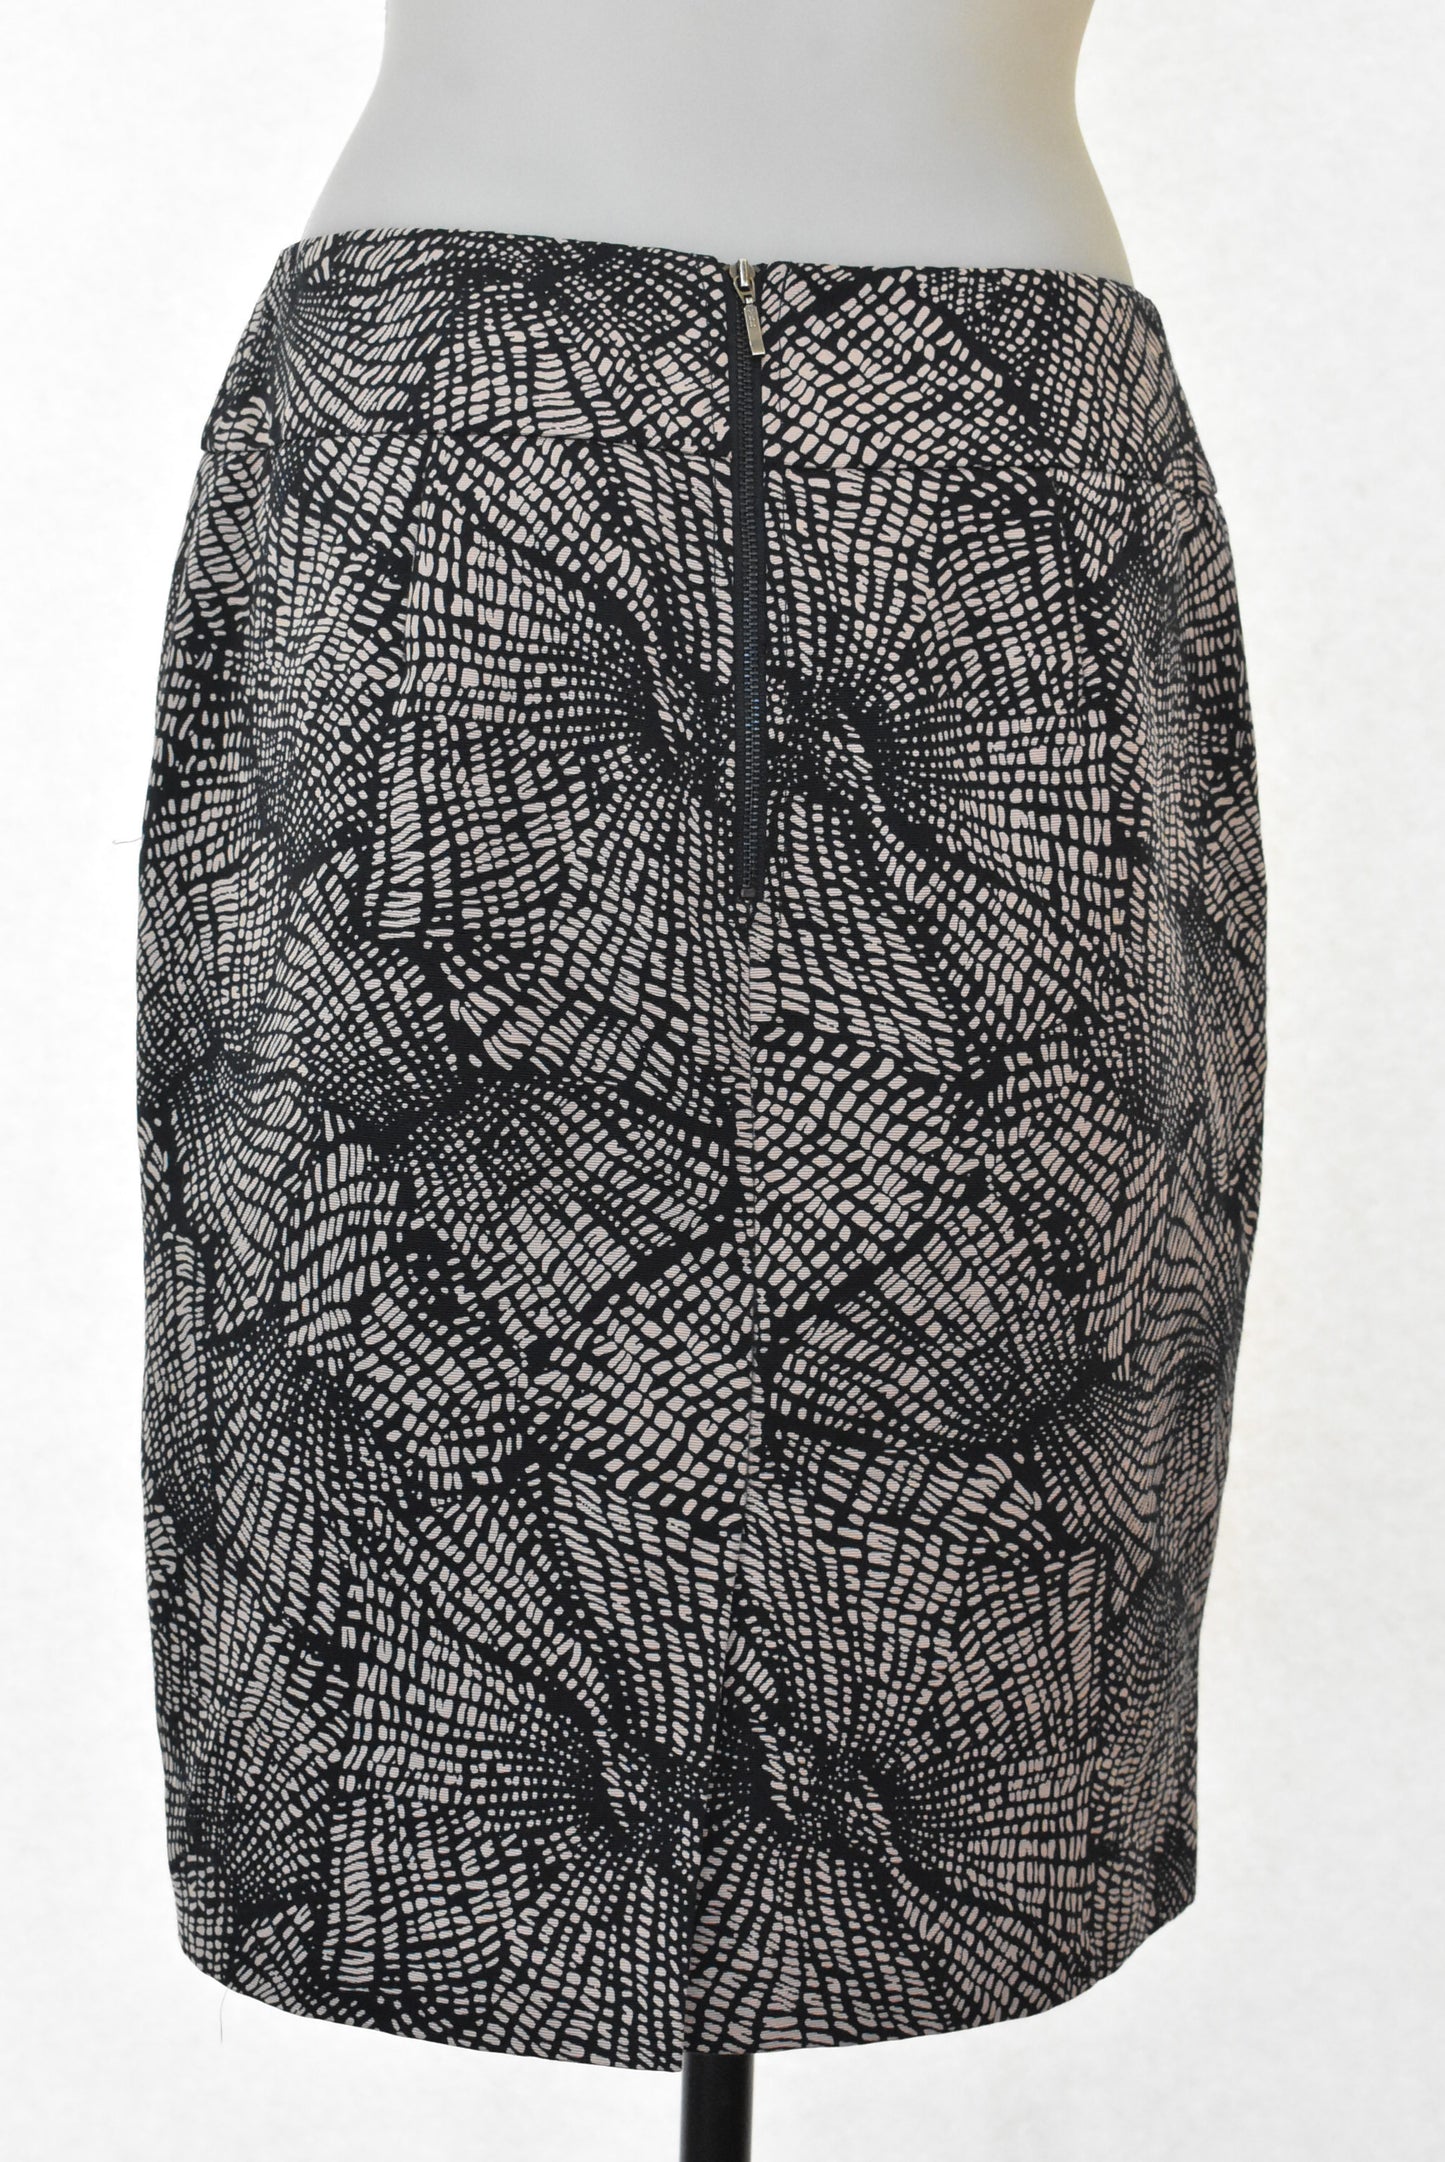 Jacqui E lined mini skirt with pockets, 10